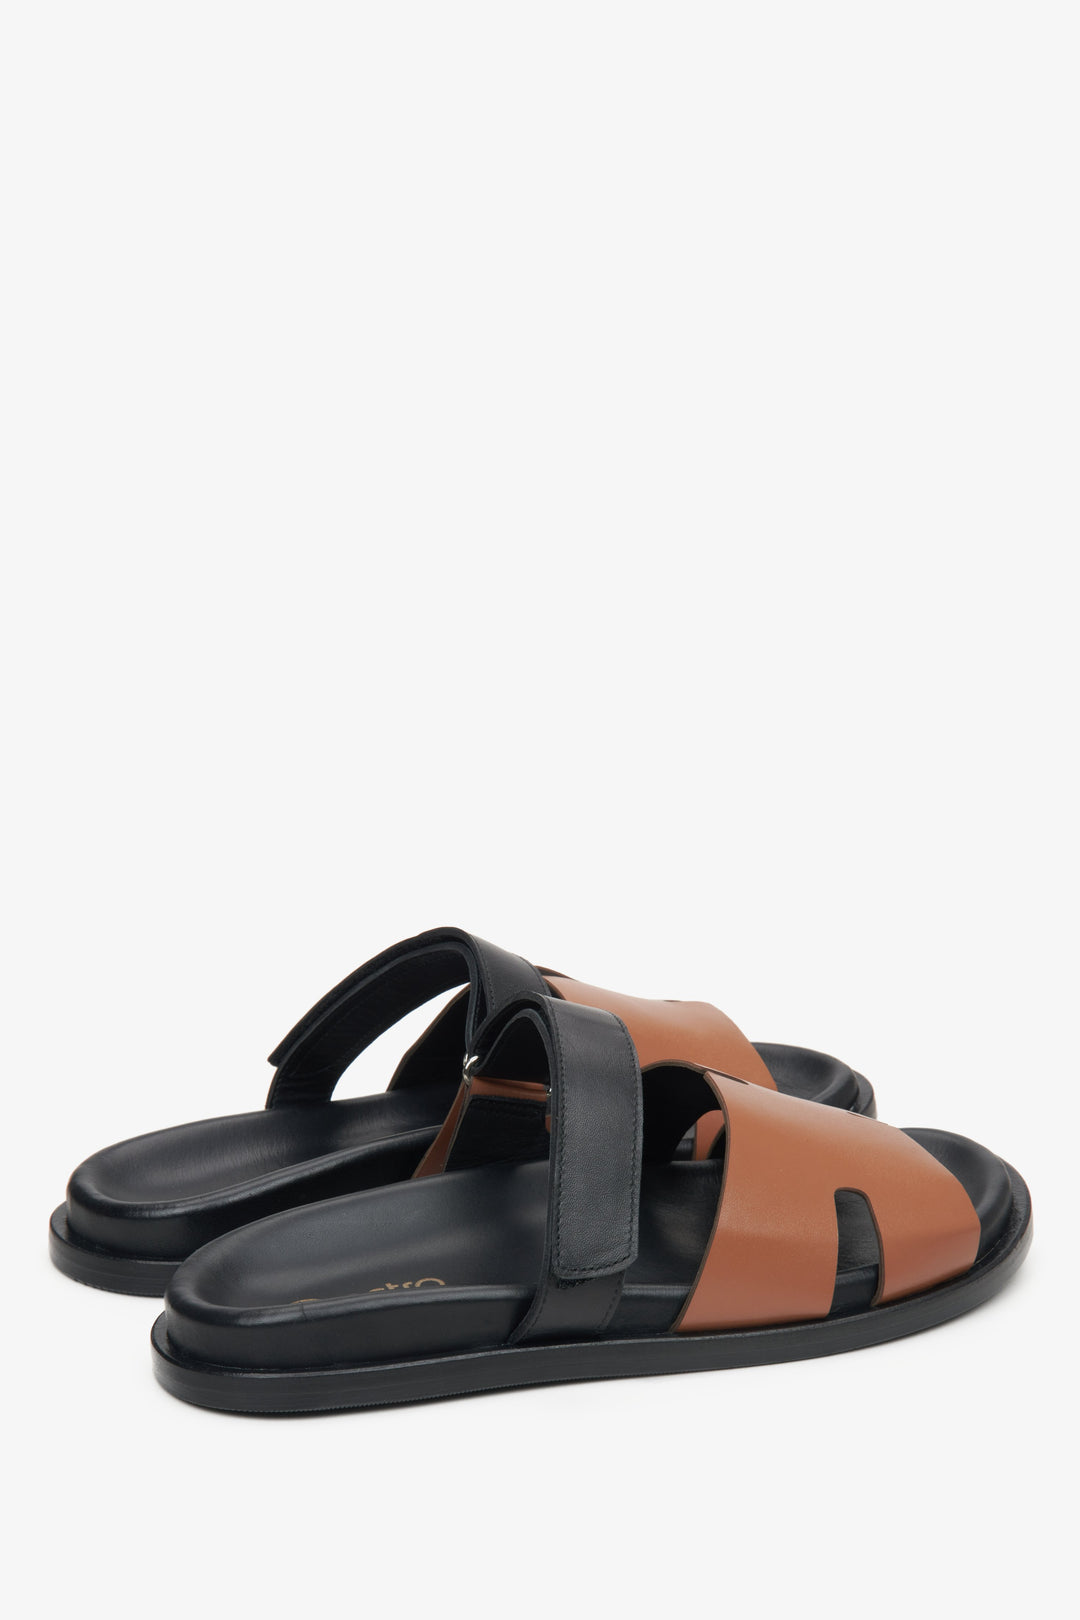 Women's brown and black leather slide sandals Estro.